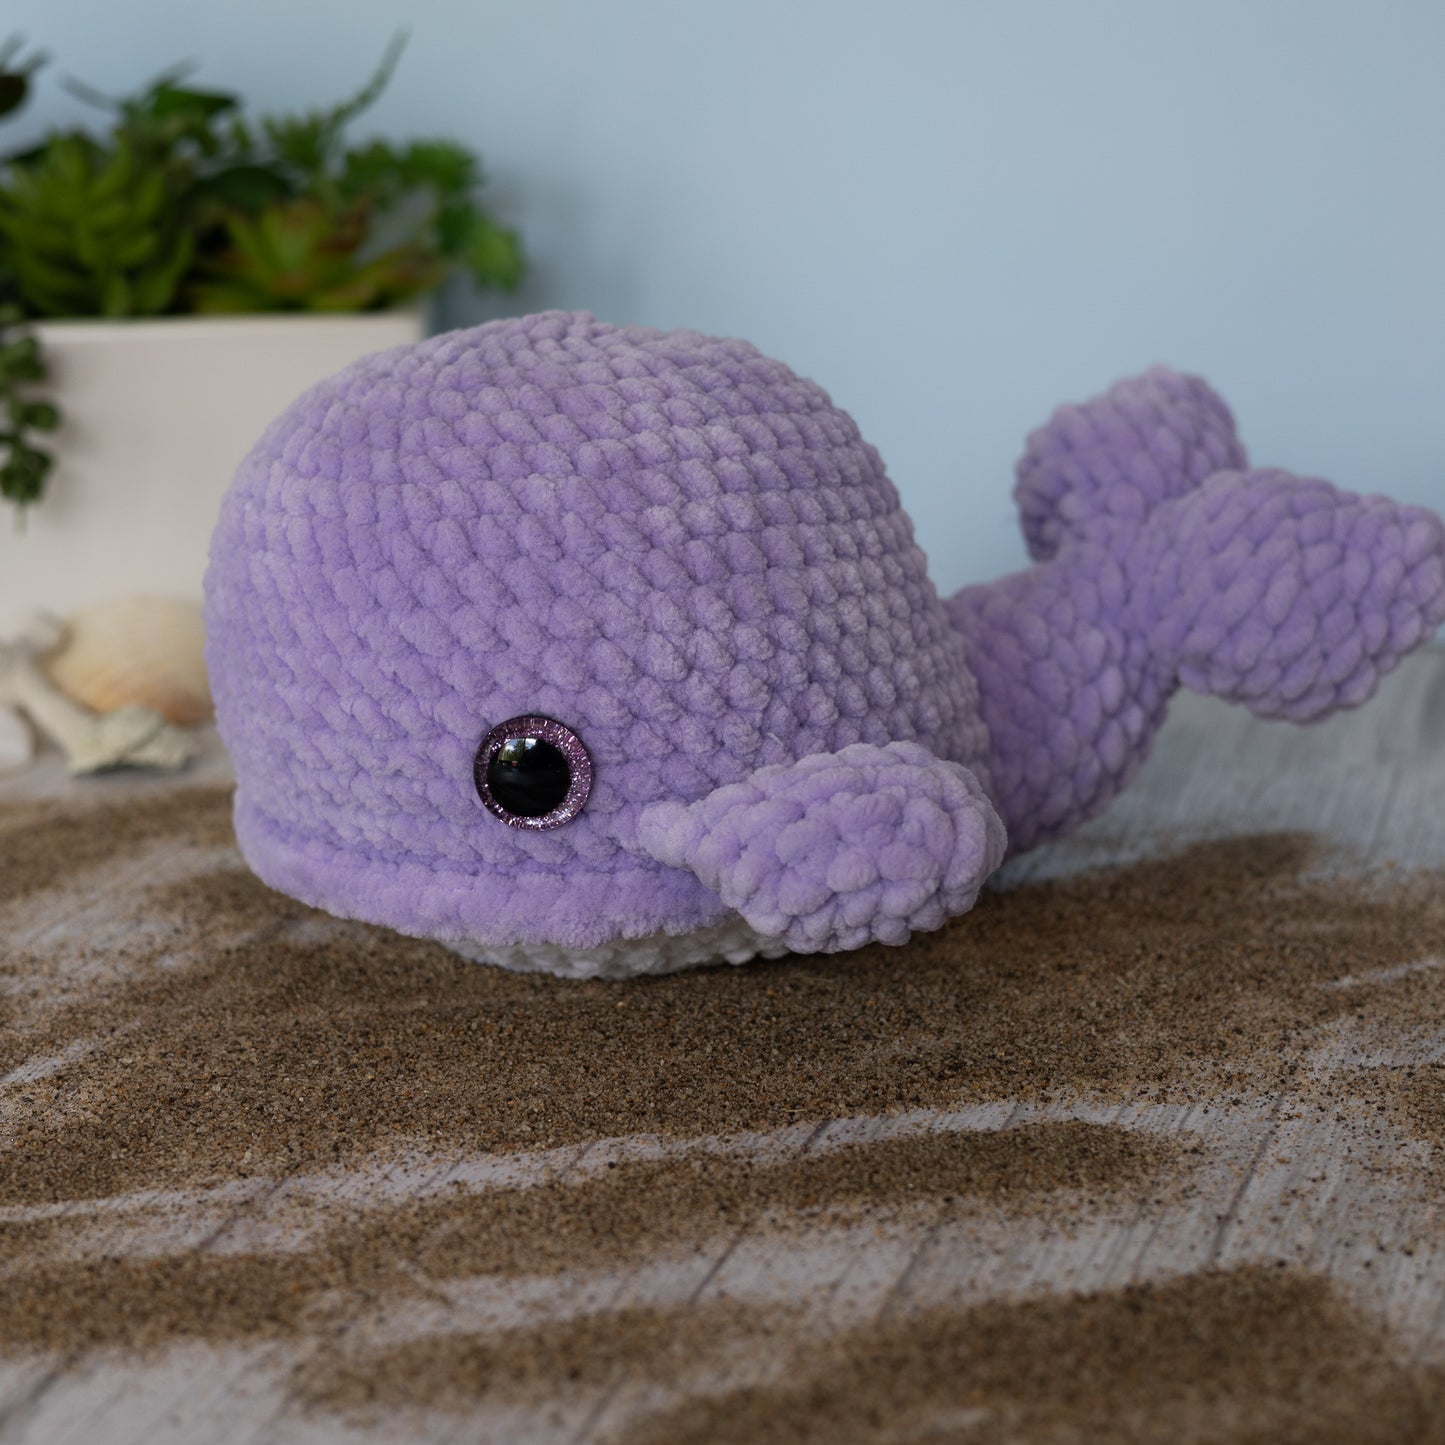 Whale Crochet Plush Toy